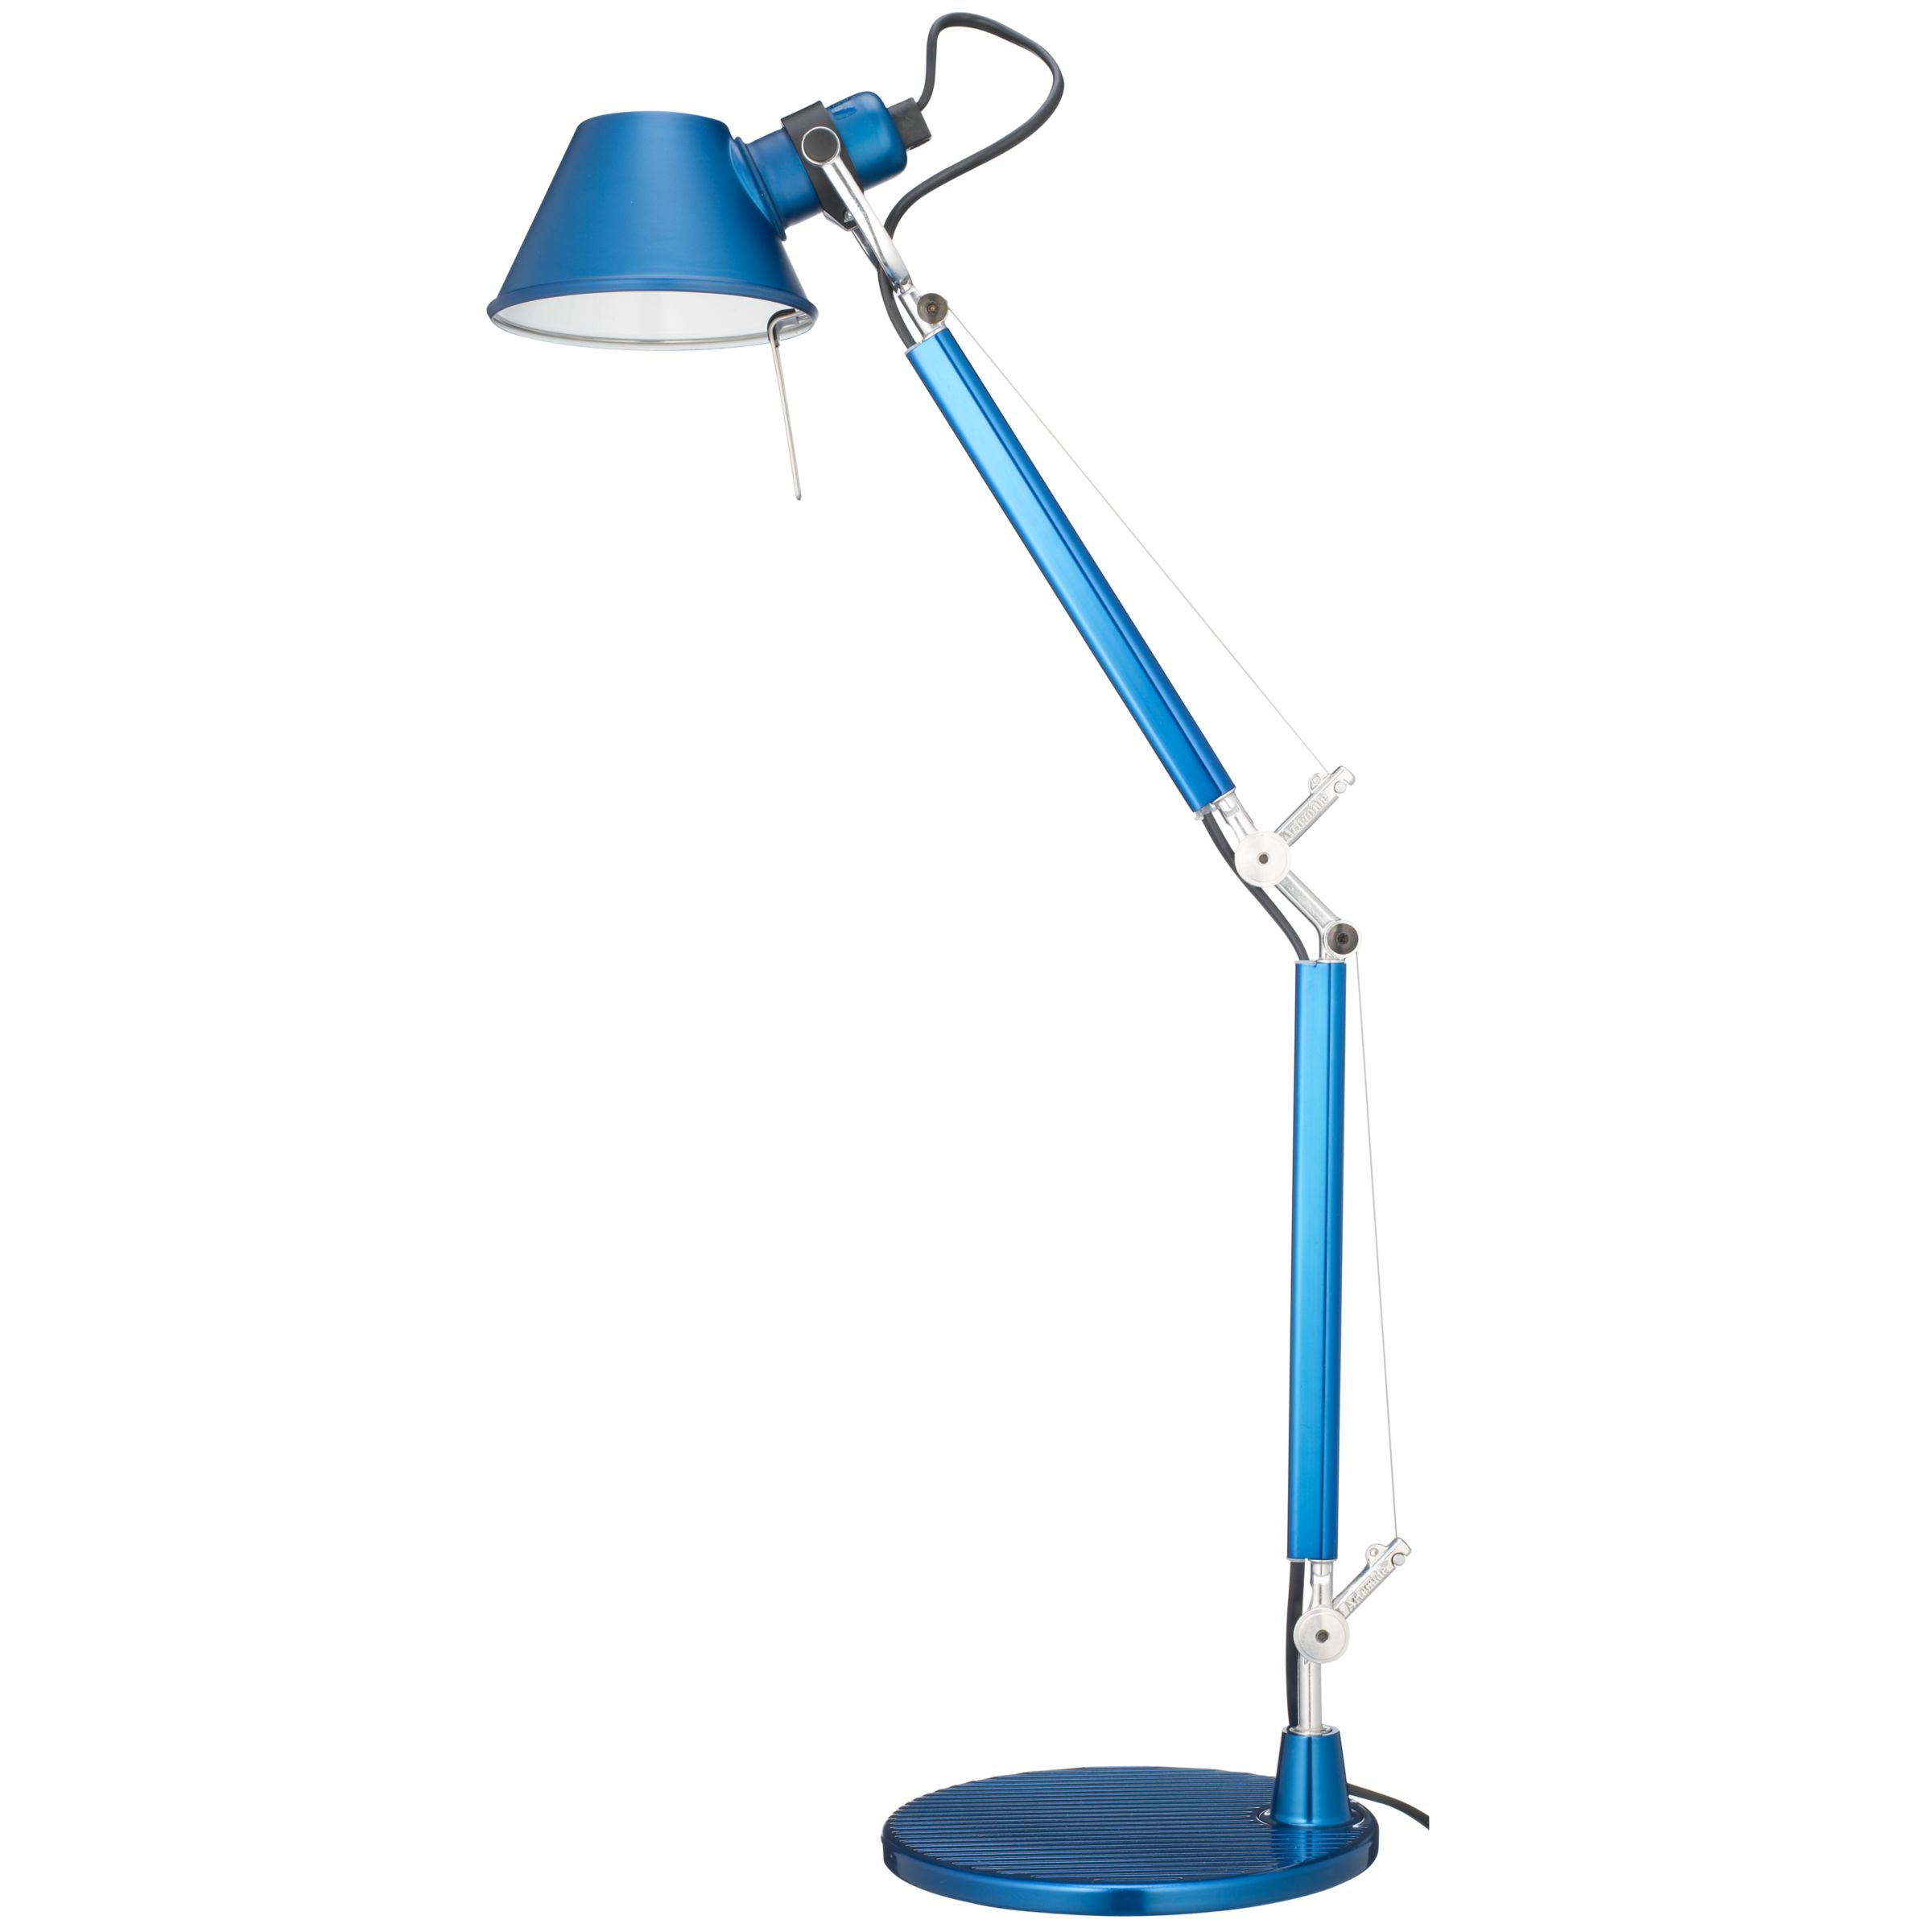 Artemide Tolomeo Micro Table Lamp, Blue at John Lewis